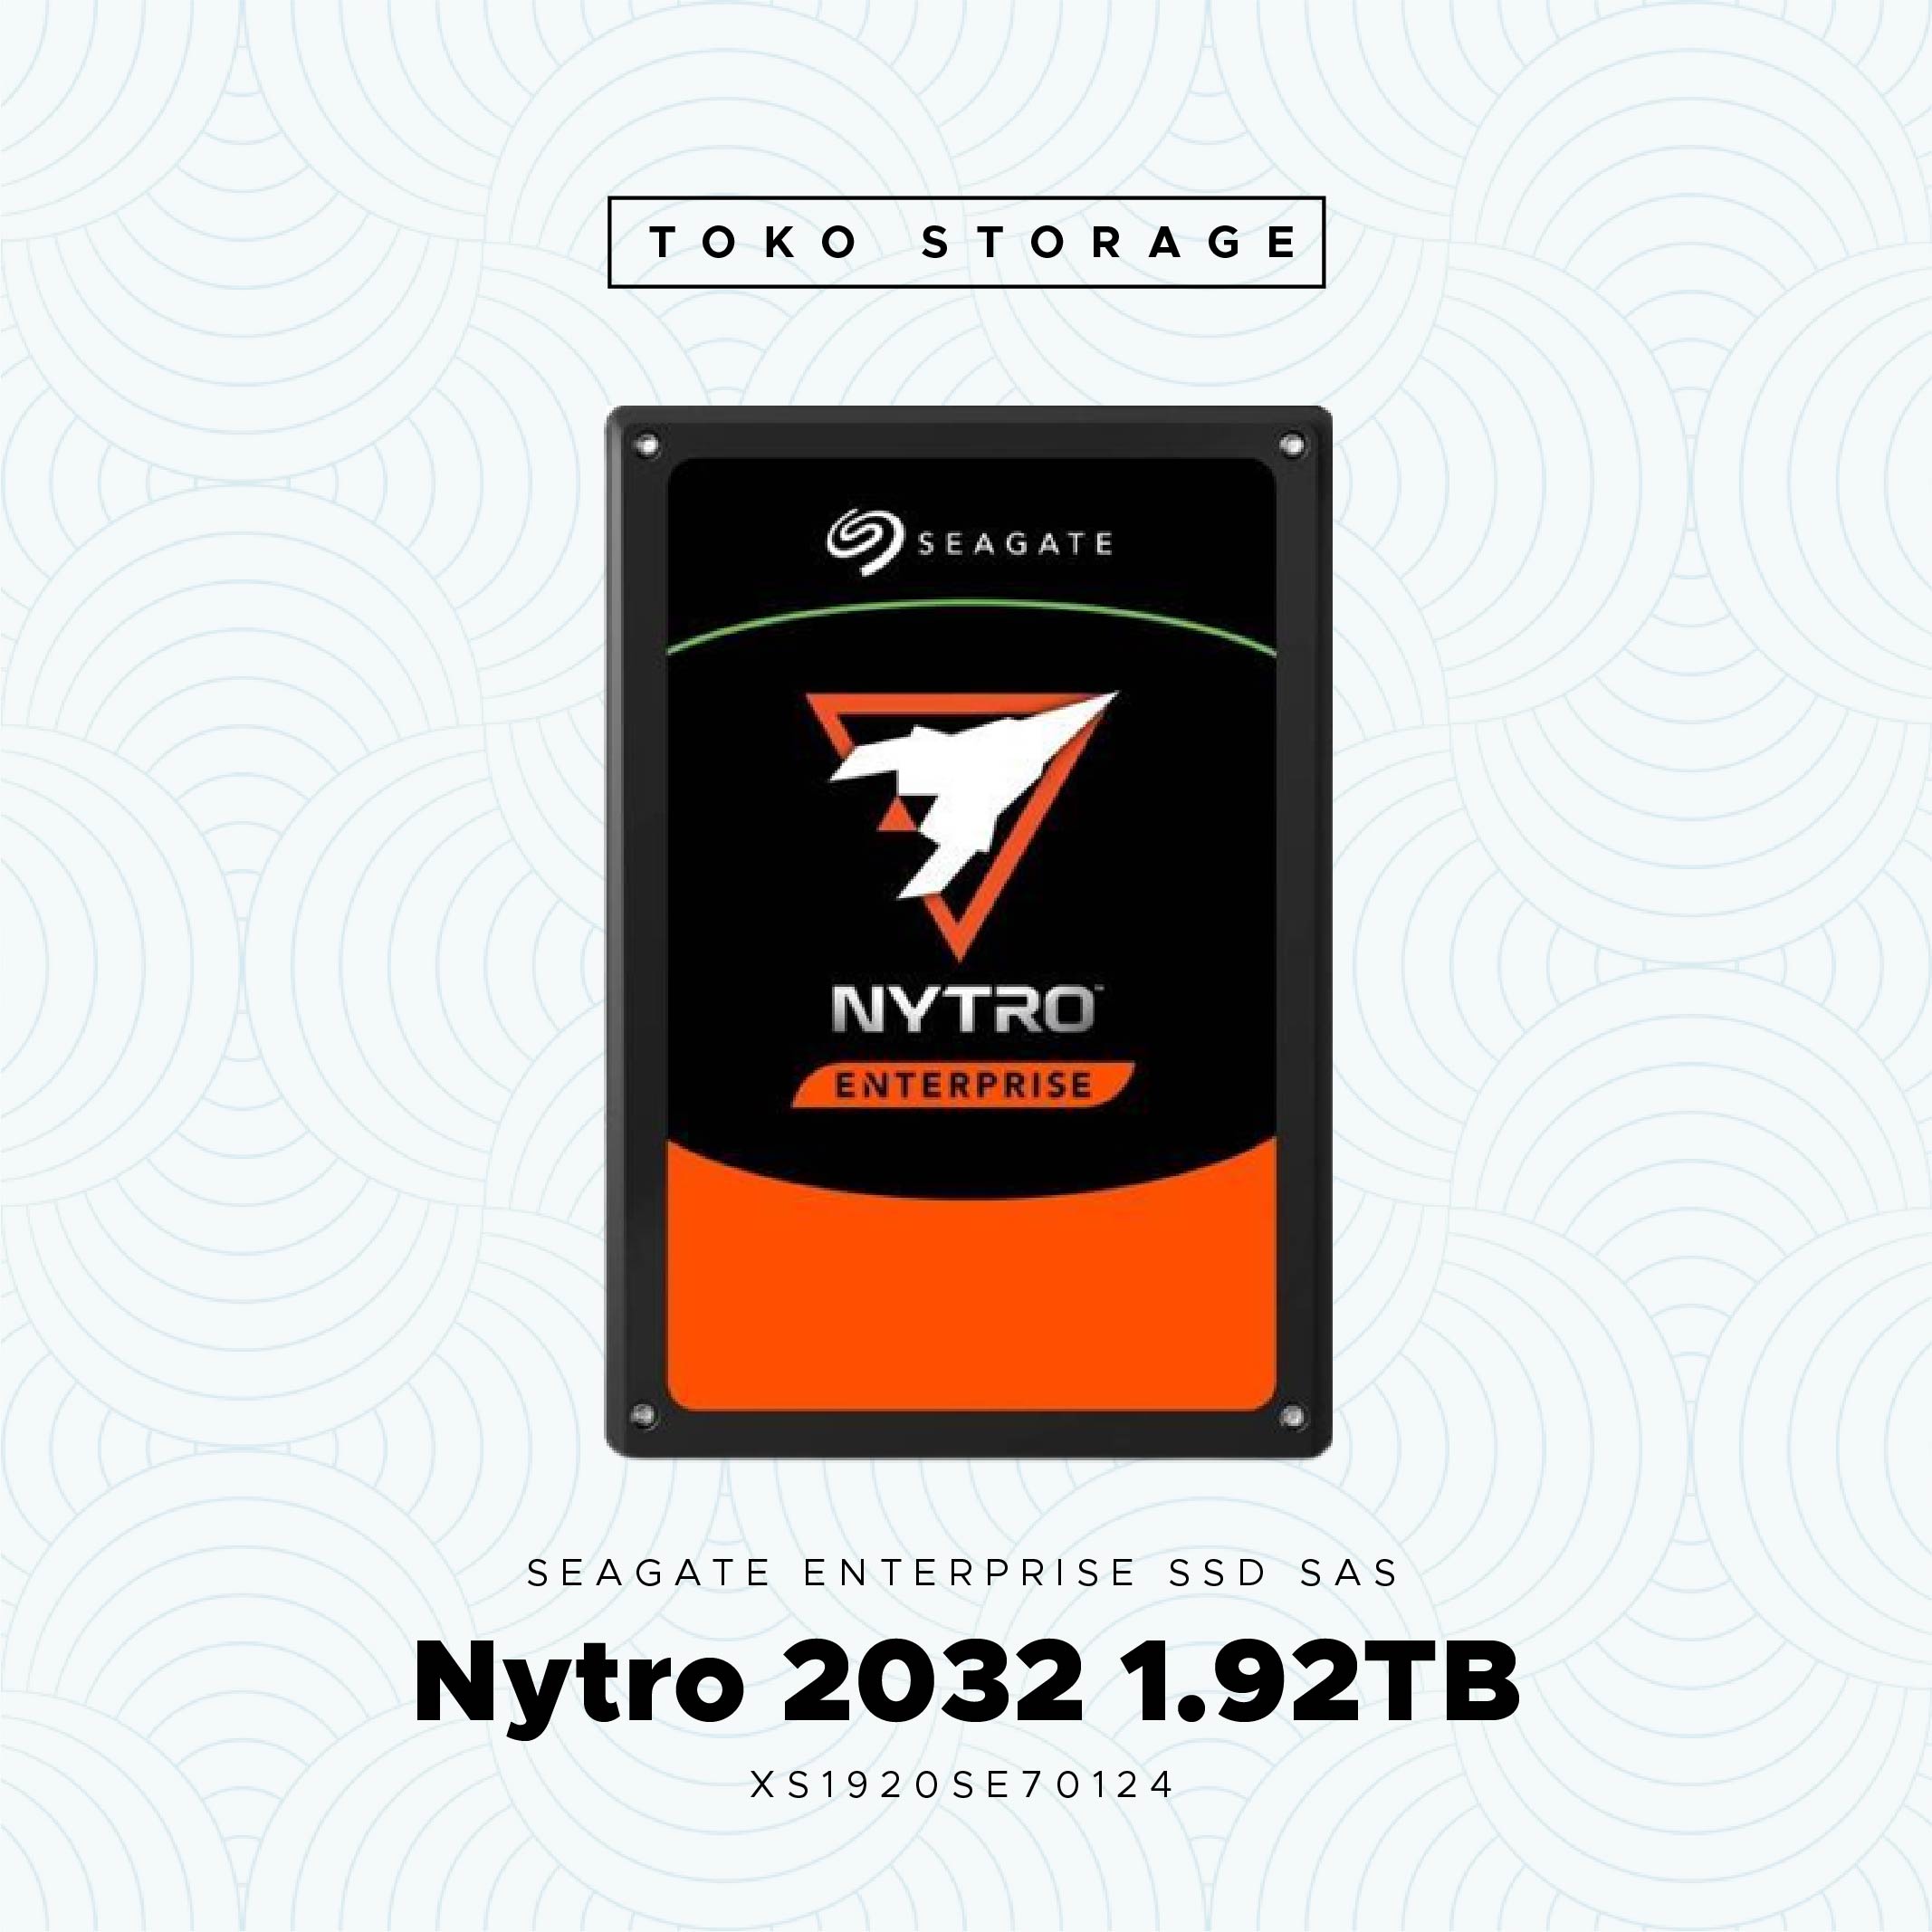 Seagate SAS SSD Nytro 2032 1.92TB